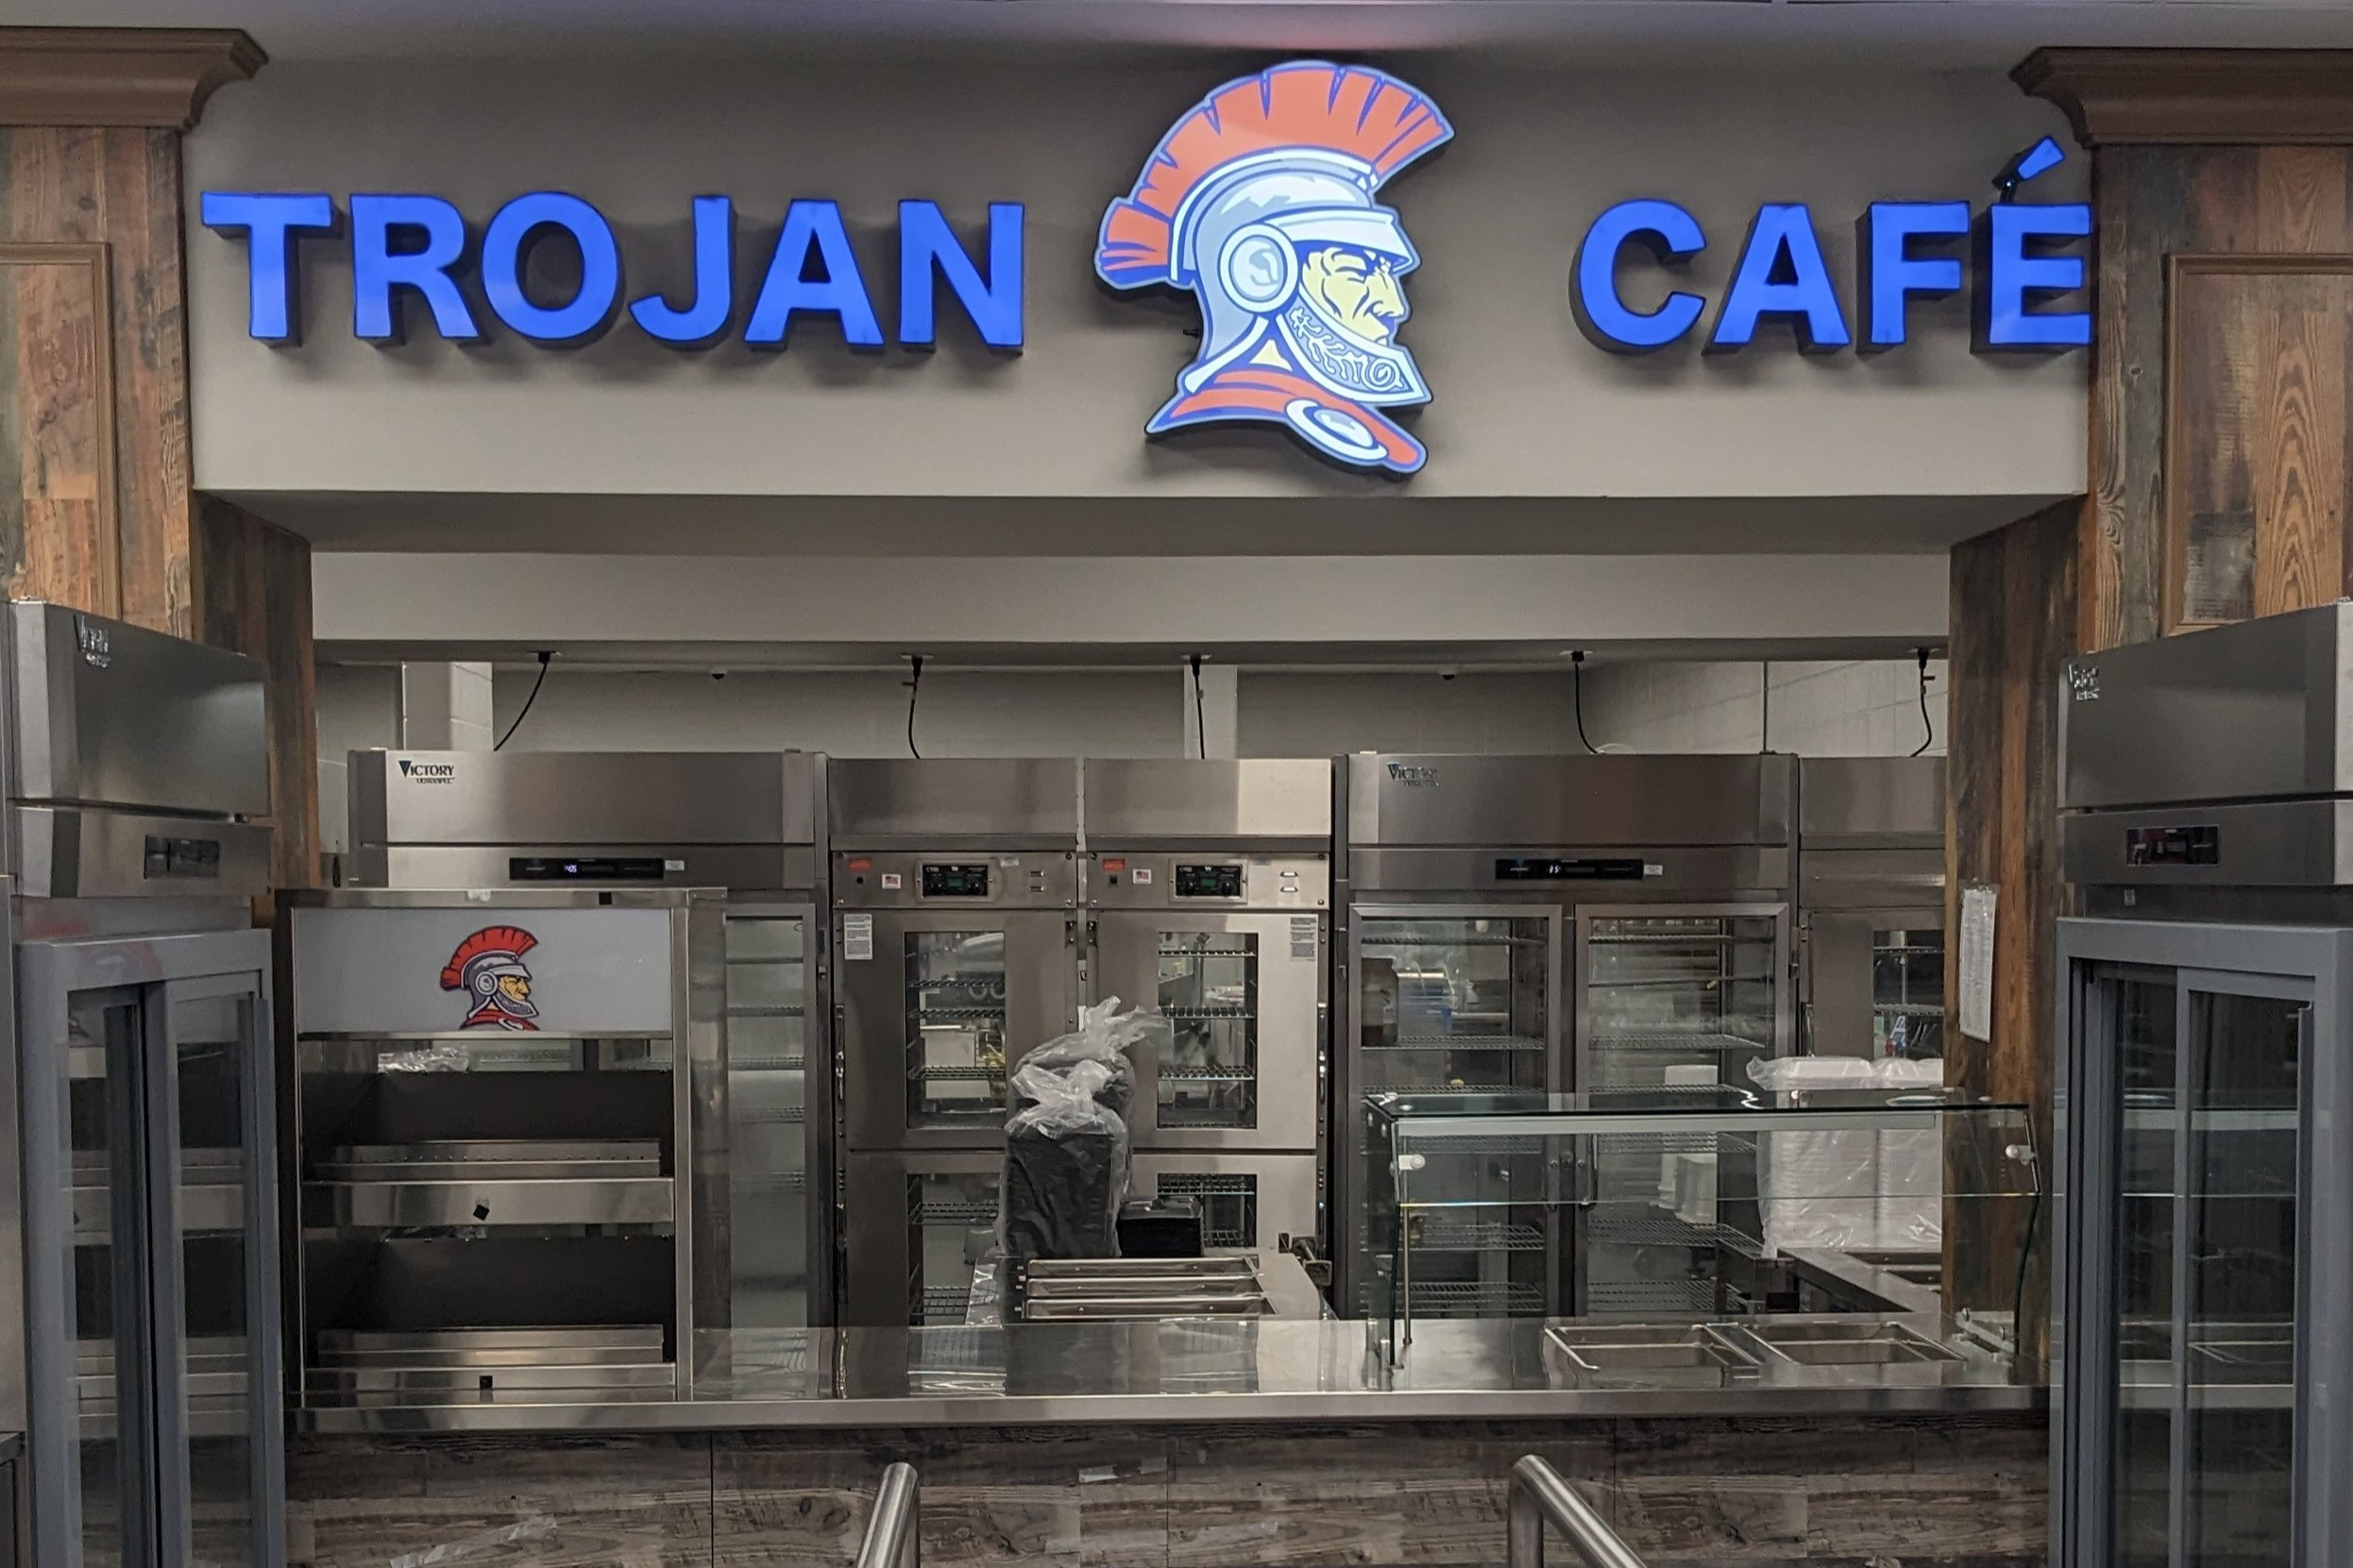 Trojan café